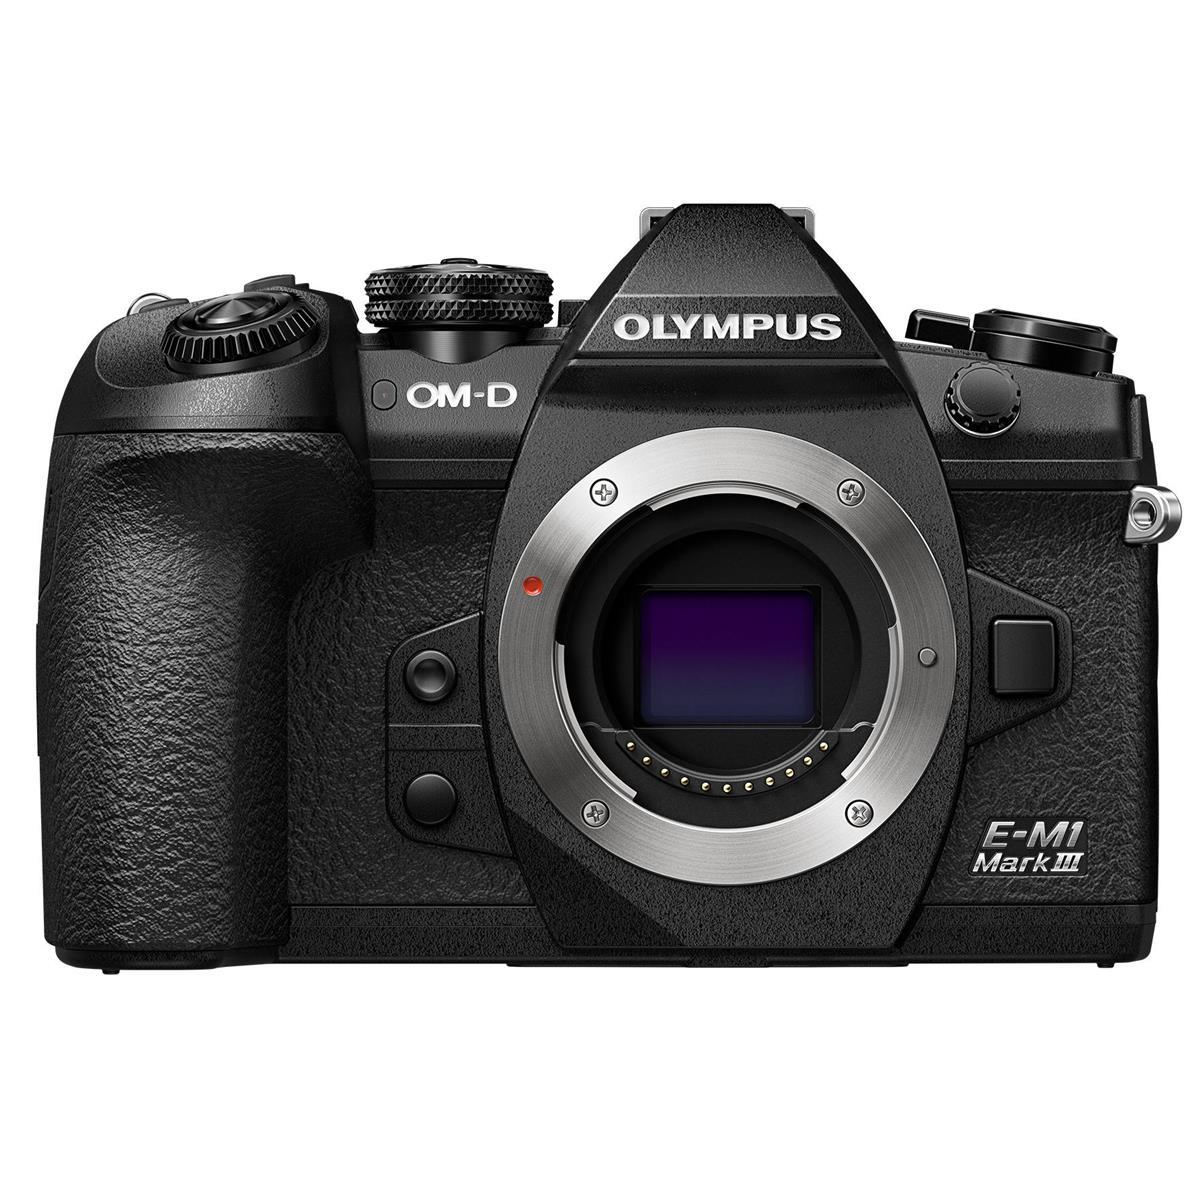 Image of Olympus OM-D E-M1 Mark III Mirrorless Digital Camera Body